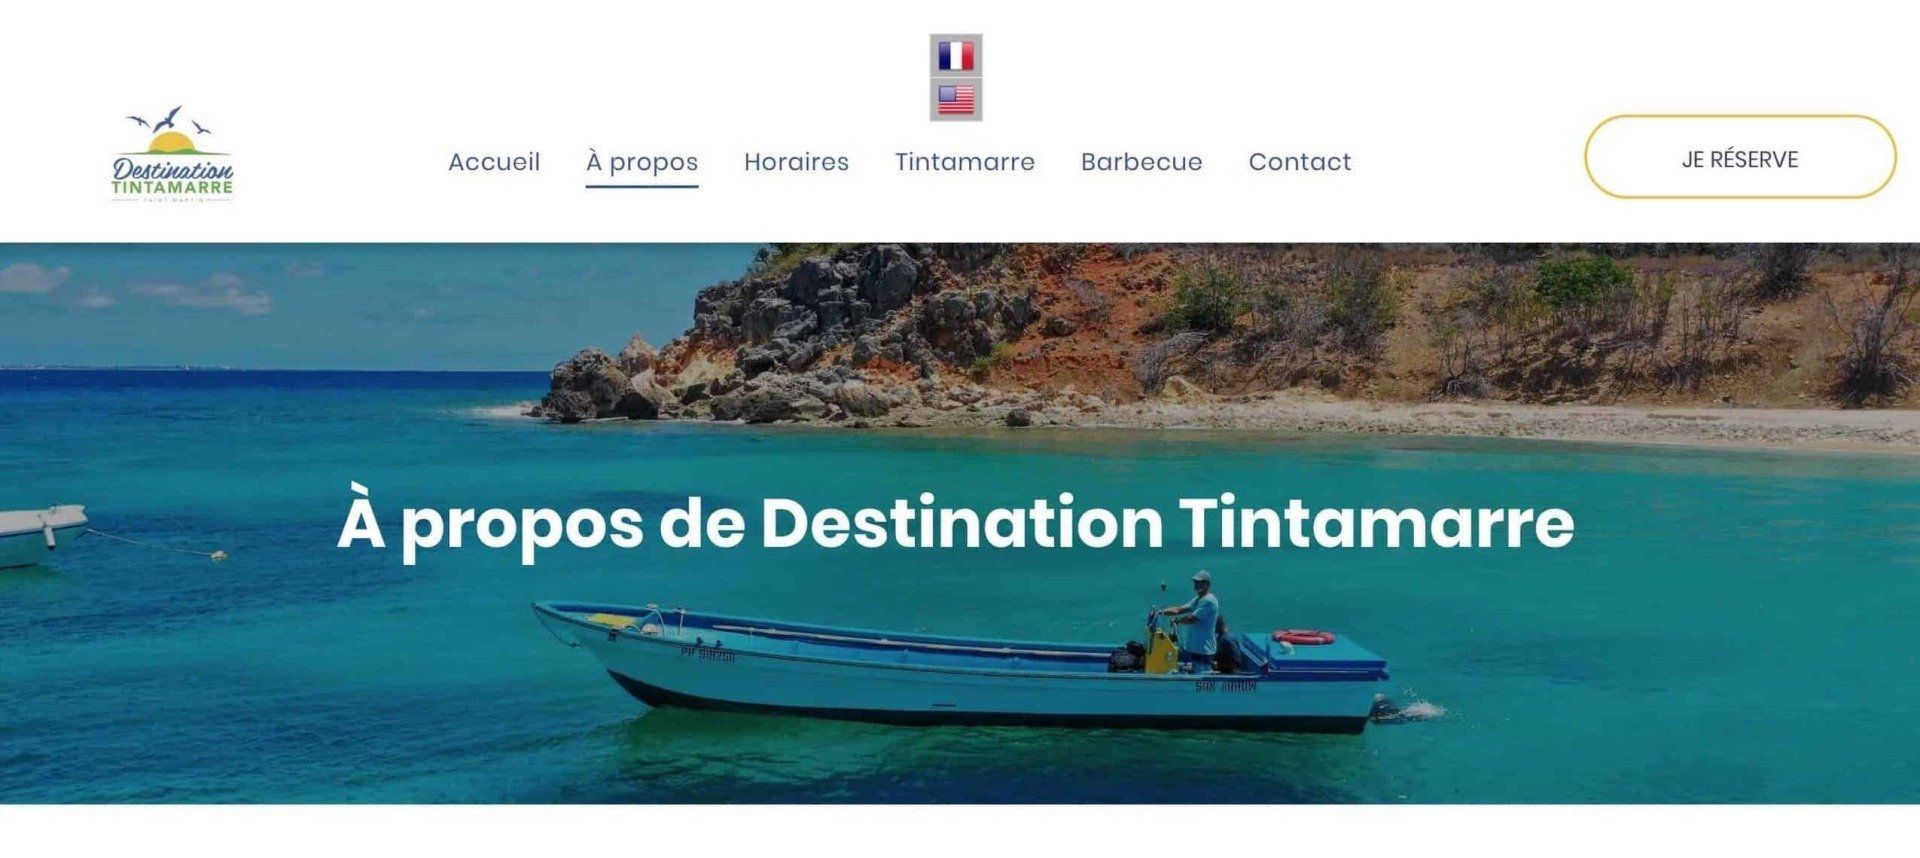 Site internet bilingue de Destination Tintamarre